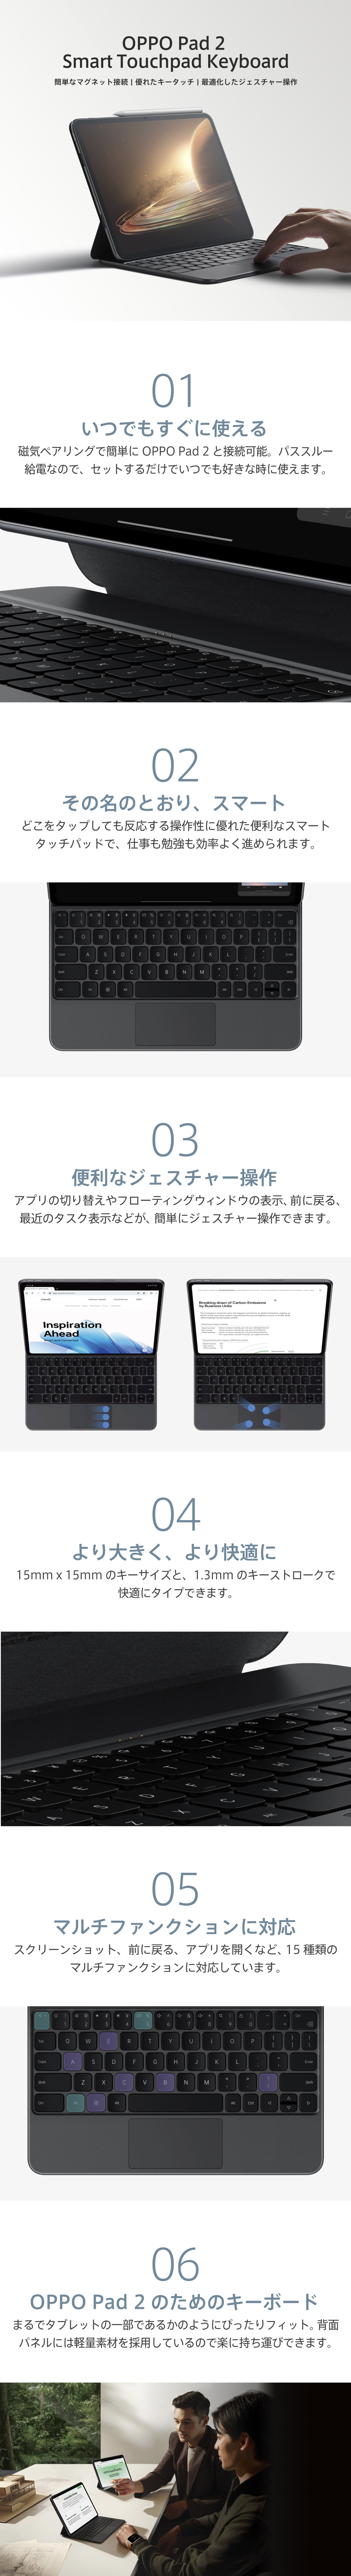 OPPO Pad 2 Smart Touchpad Keyboard ブラック | アクセサリ | OPPO